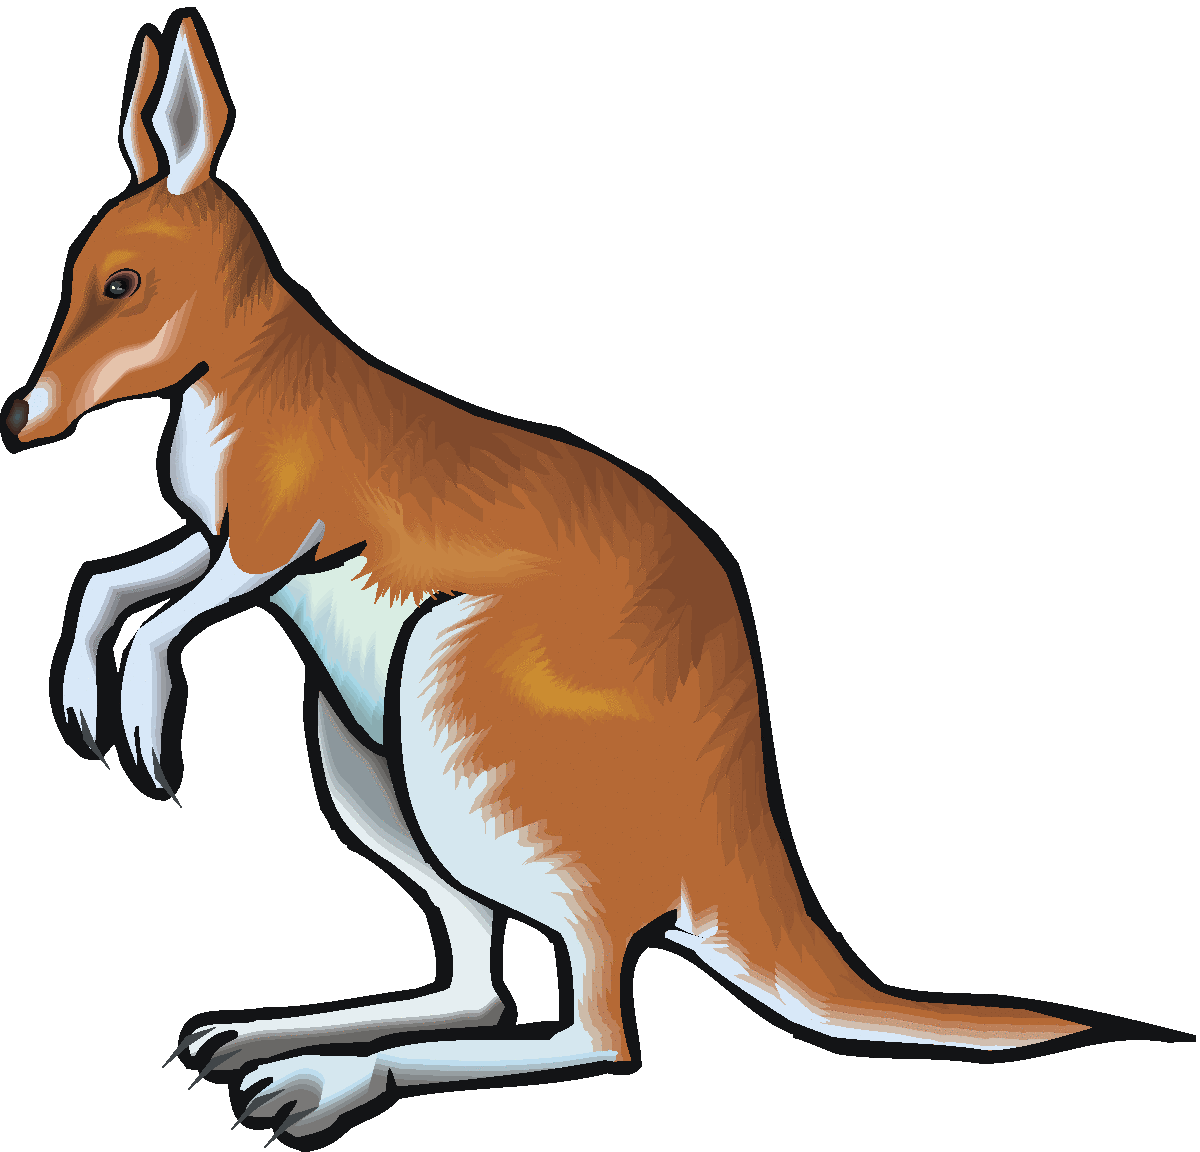 Kangaroo Clip Art Free - Free Clipart Images